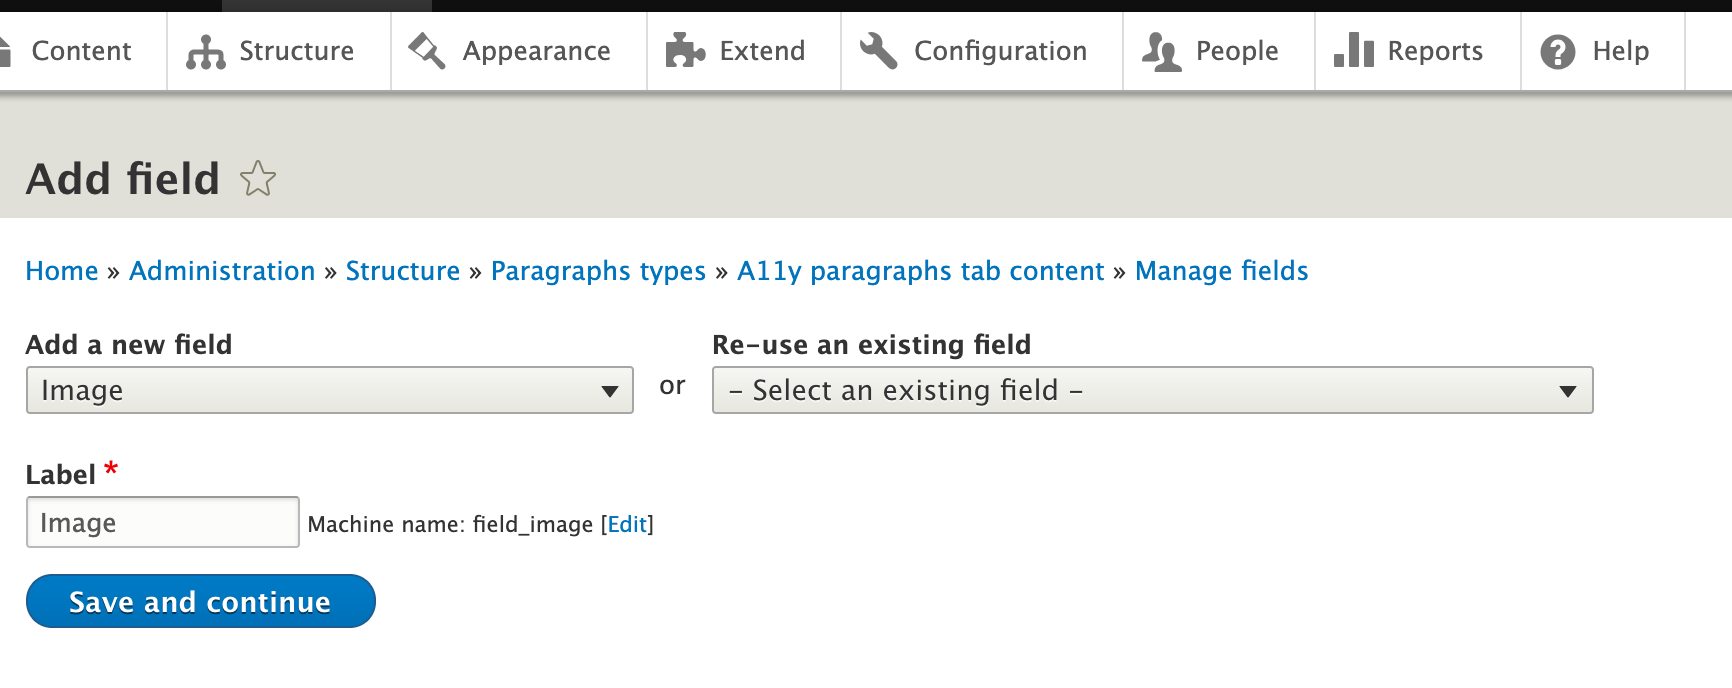 04-adding-fields--add-image-field.png 